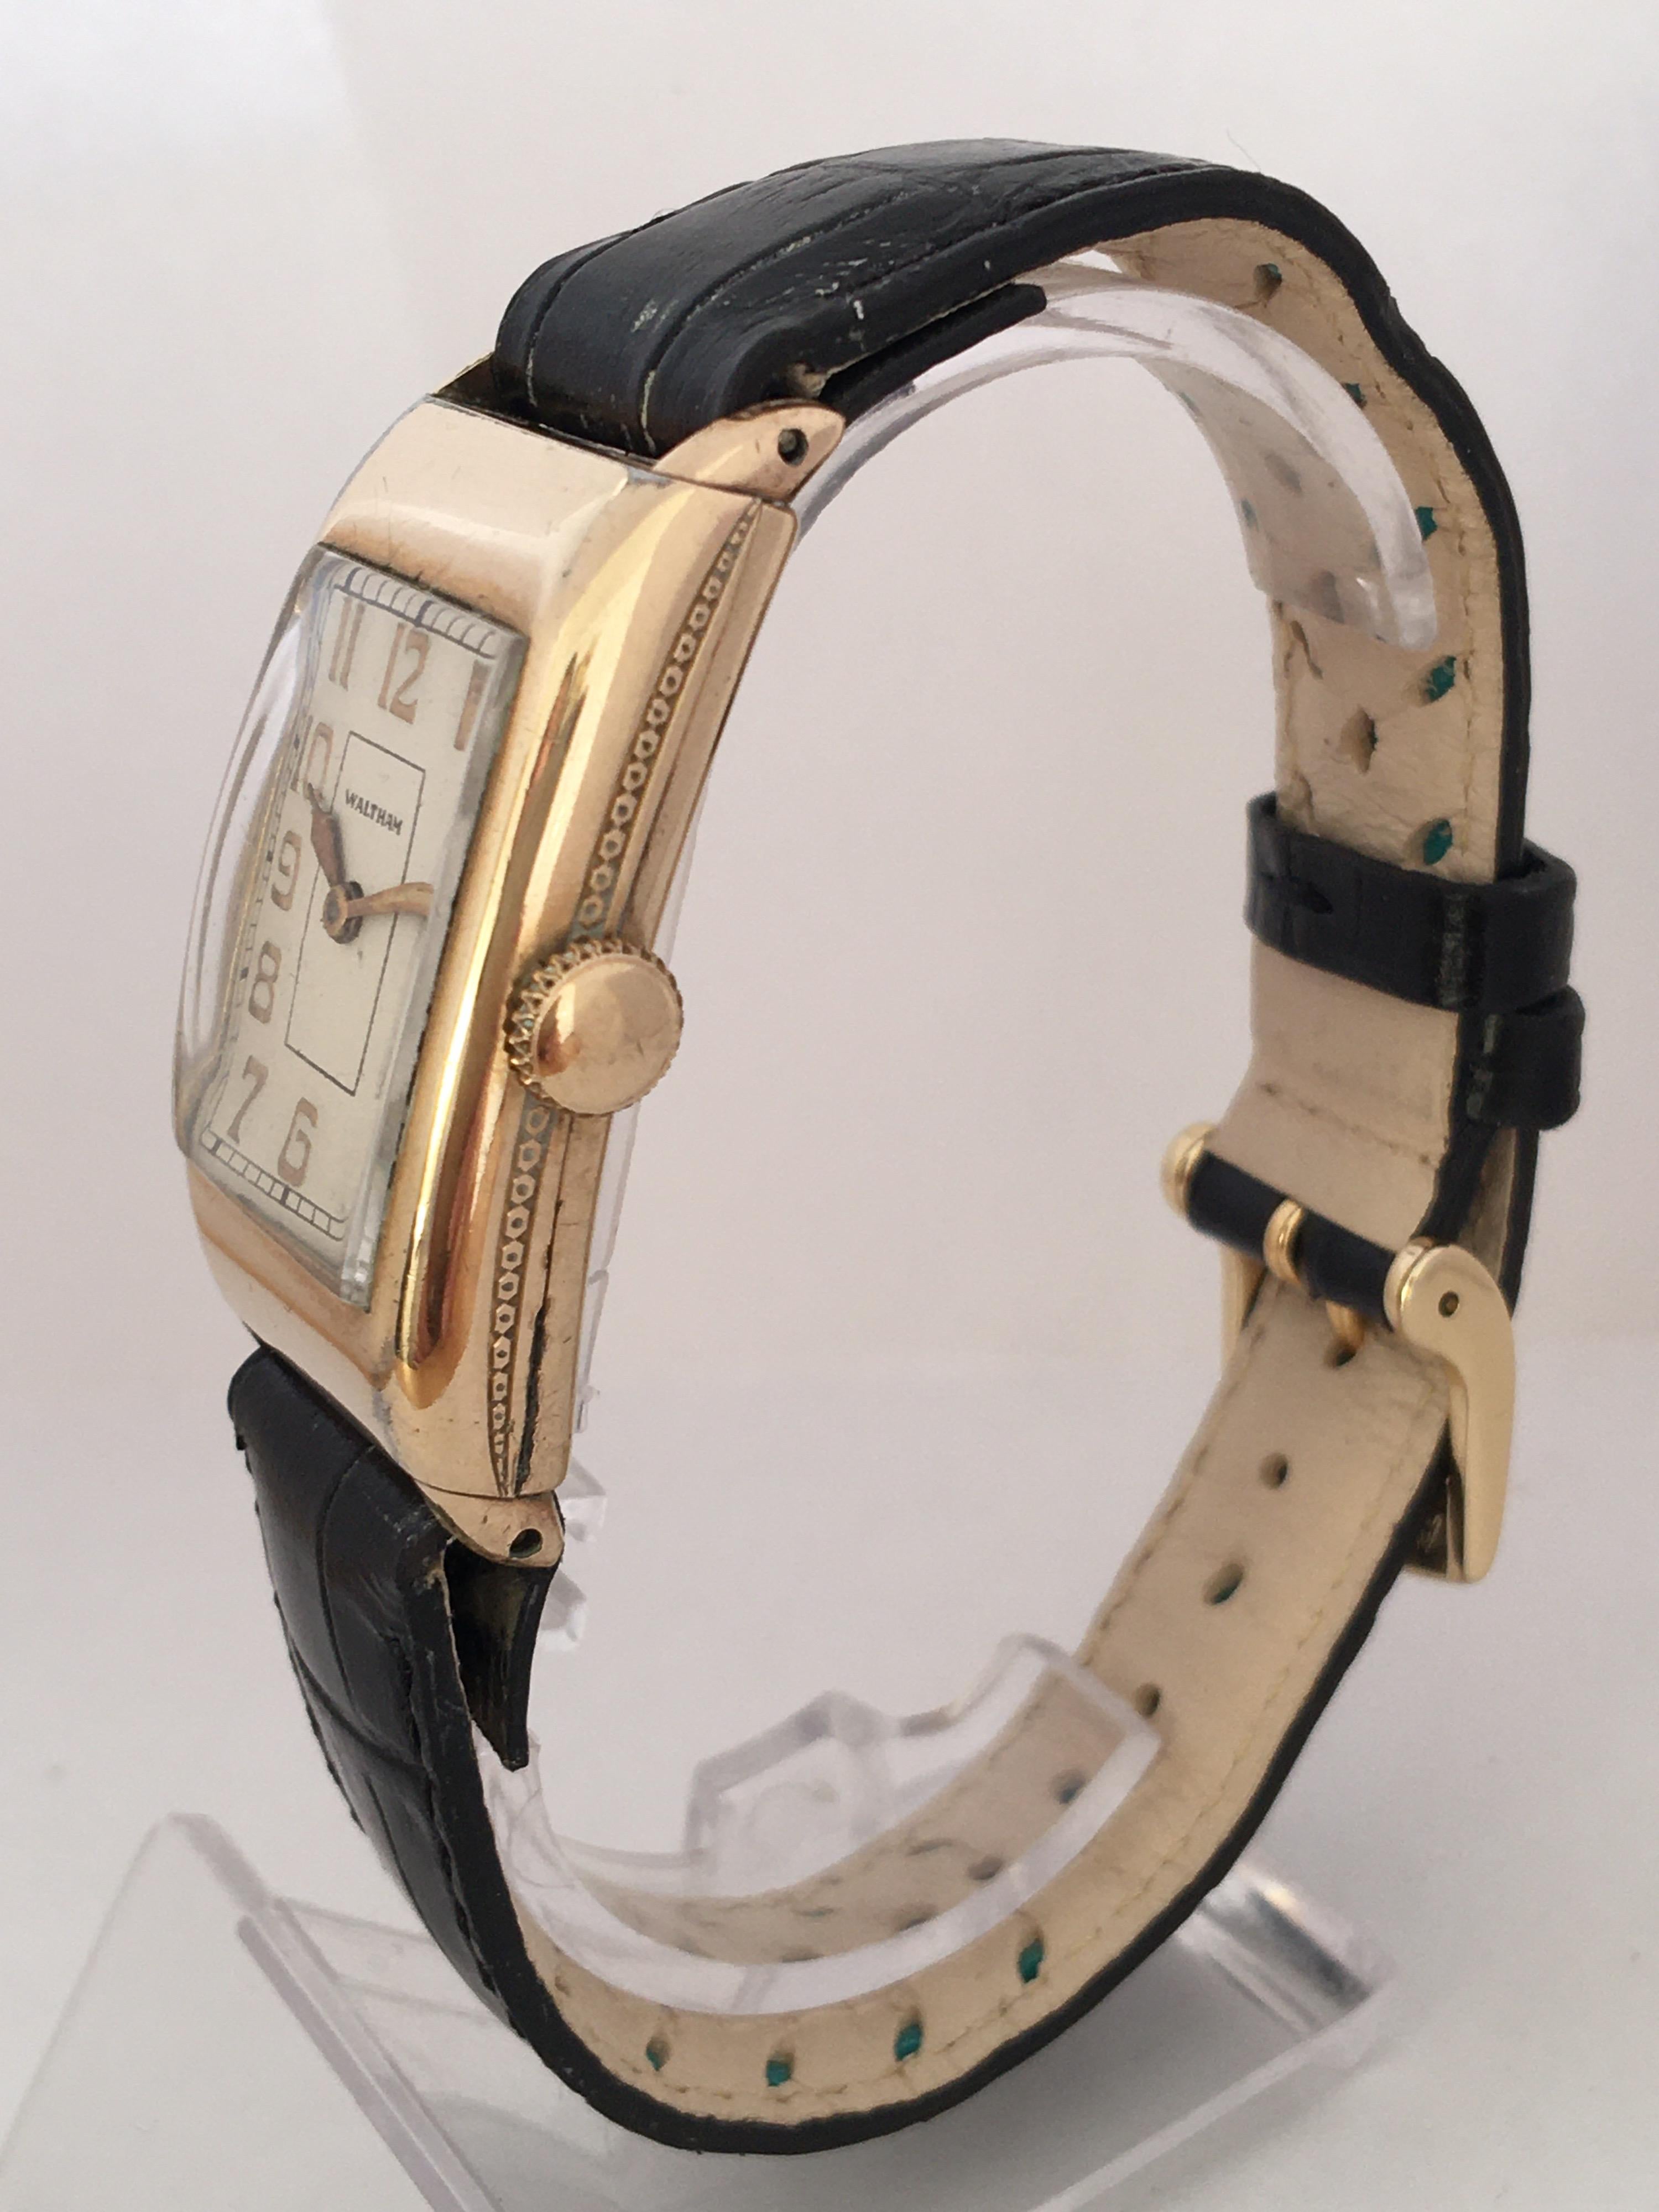 waltham wrist watch value